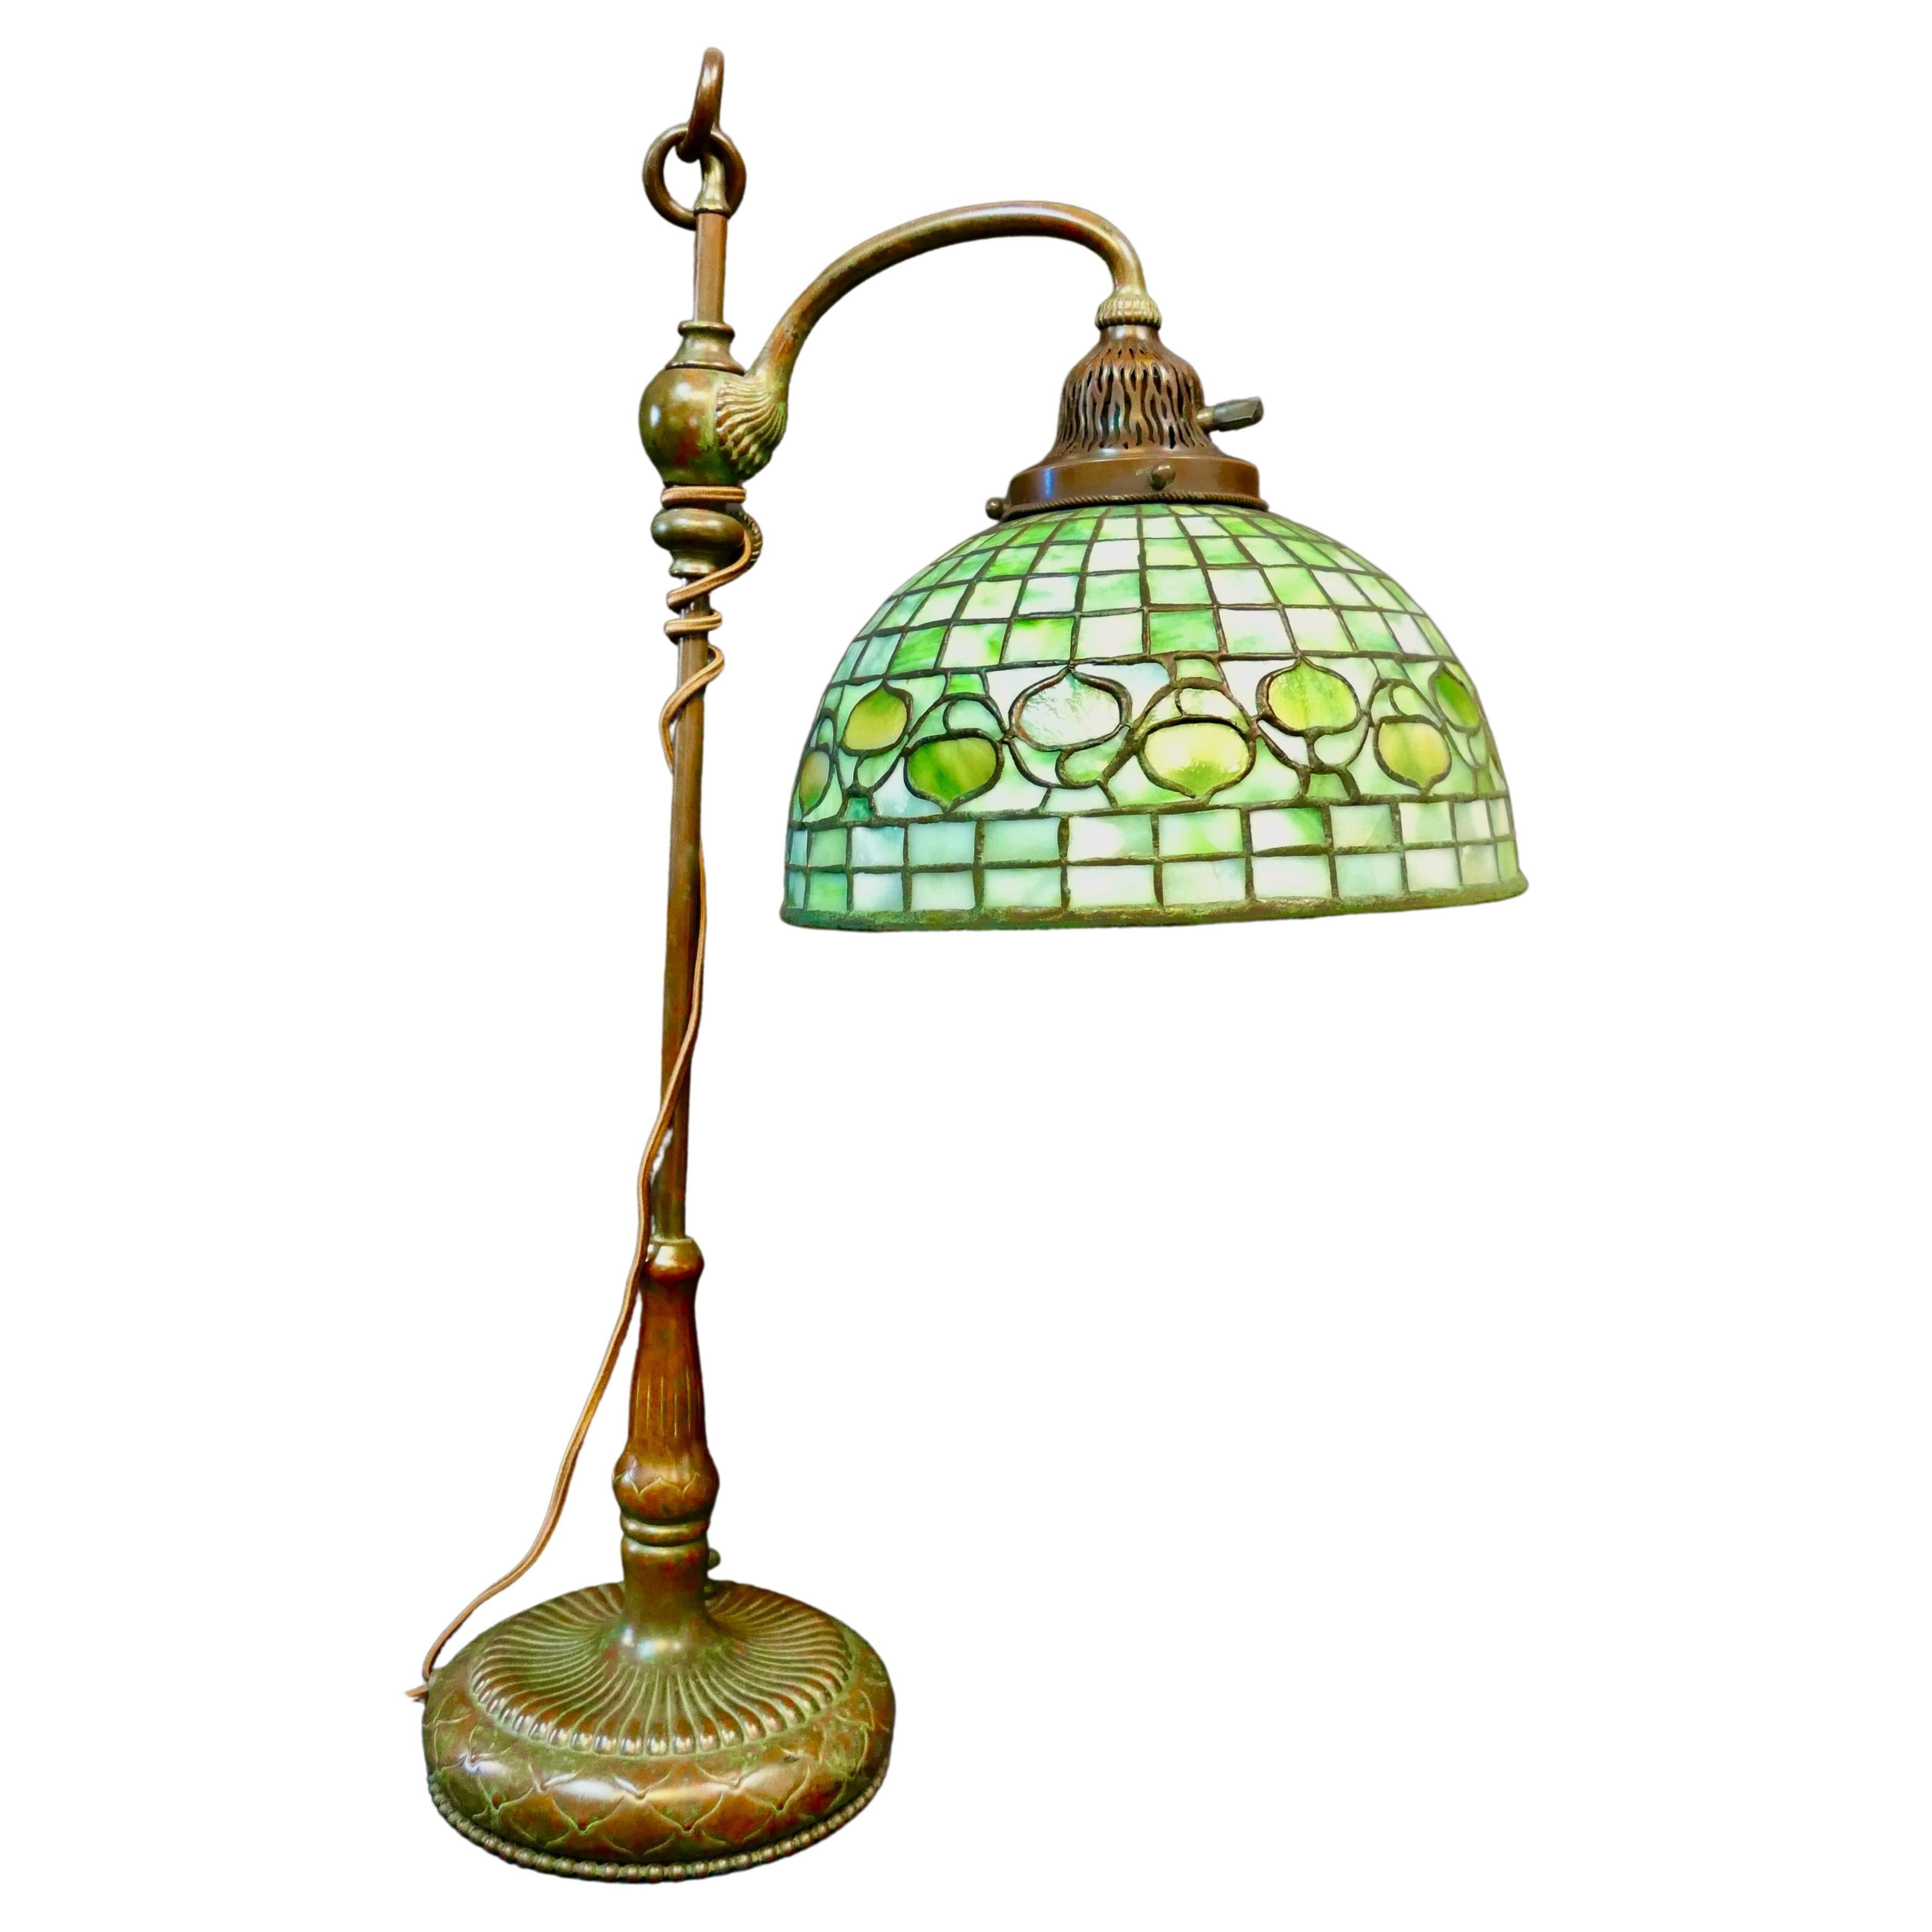 Early Tiffany Studios Acorn Student/Desk Lamp